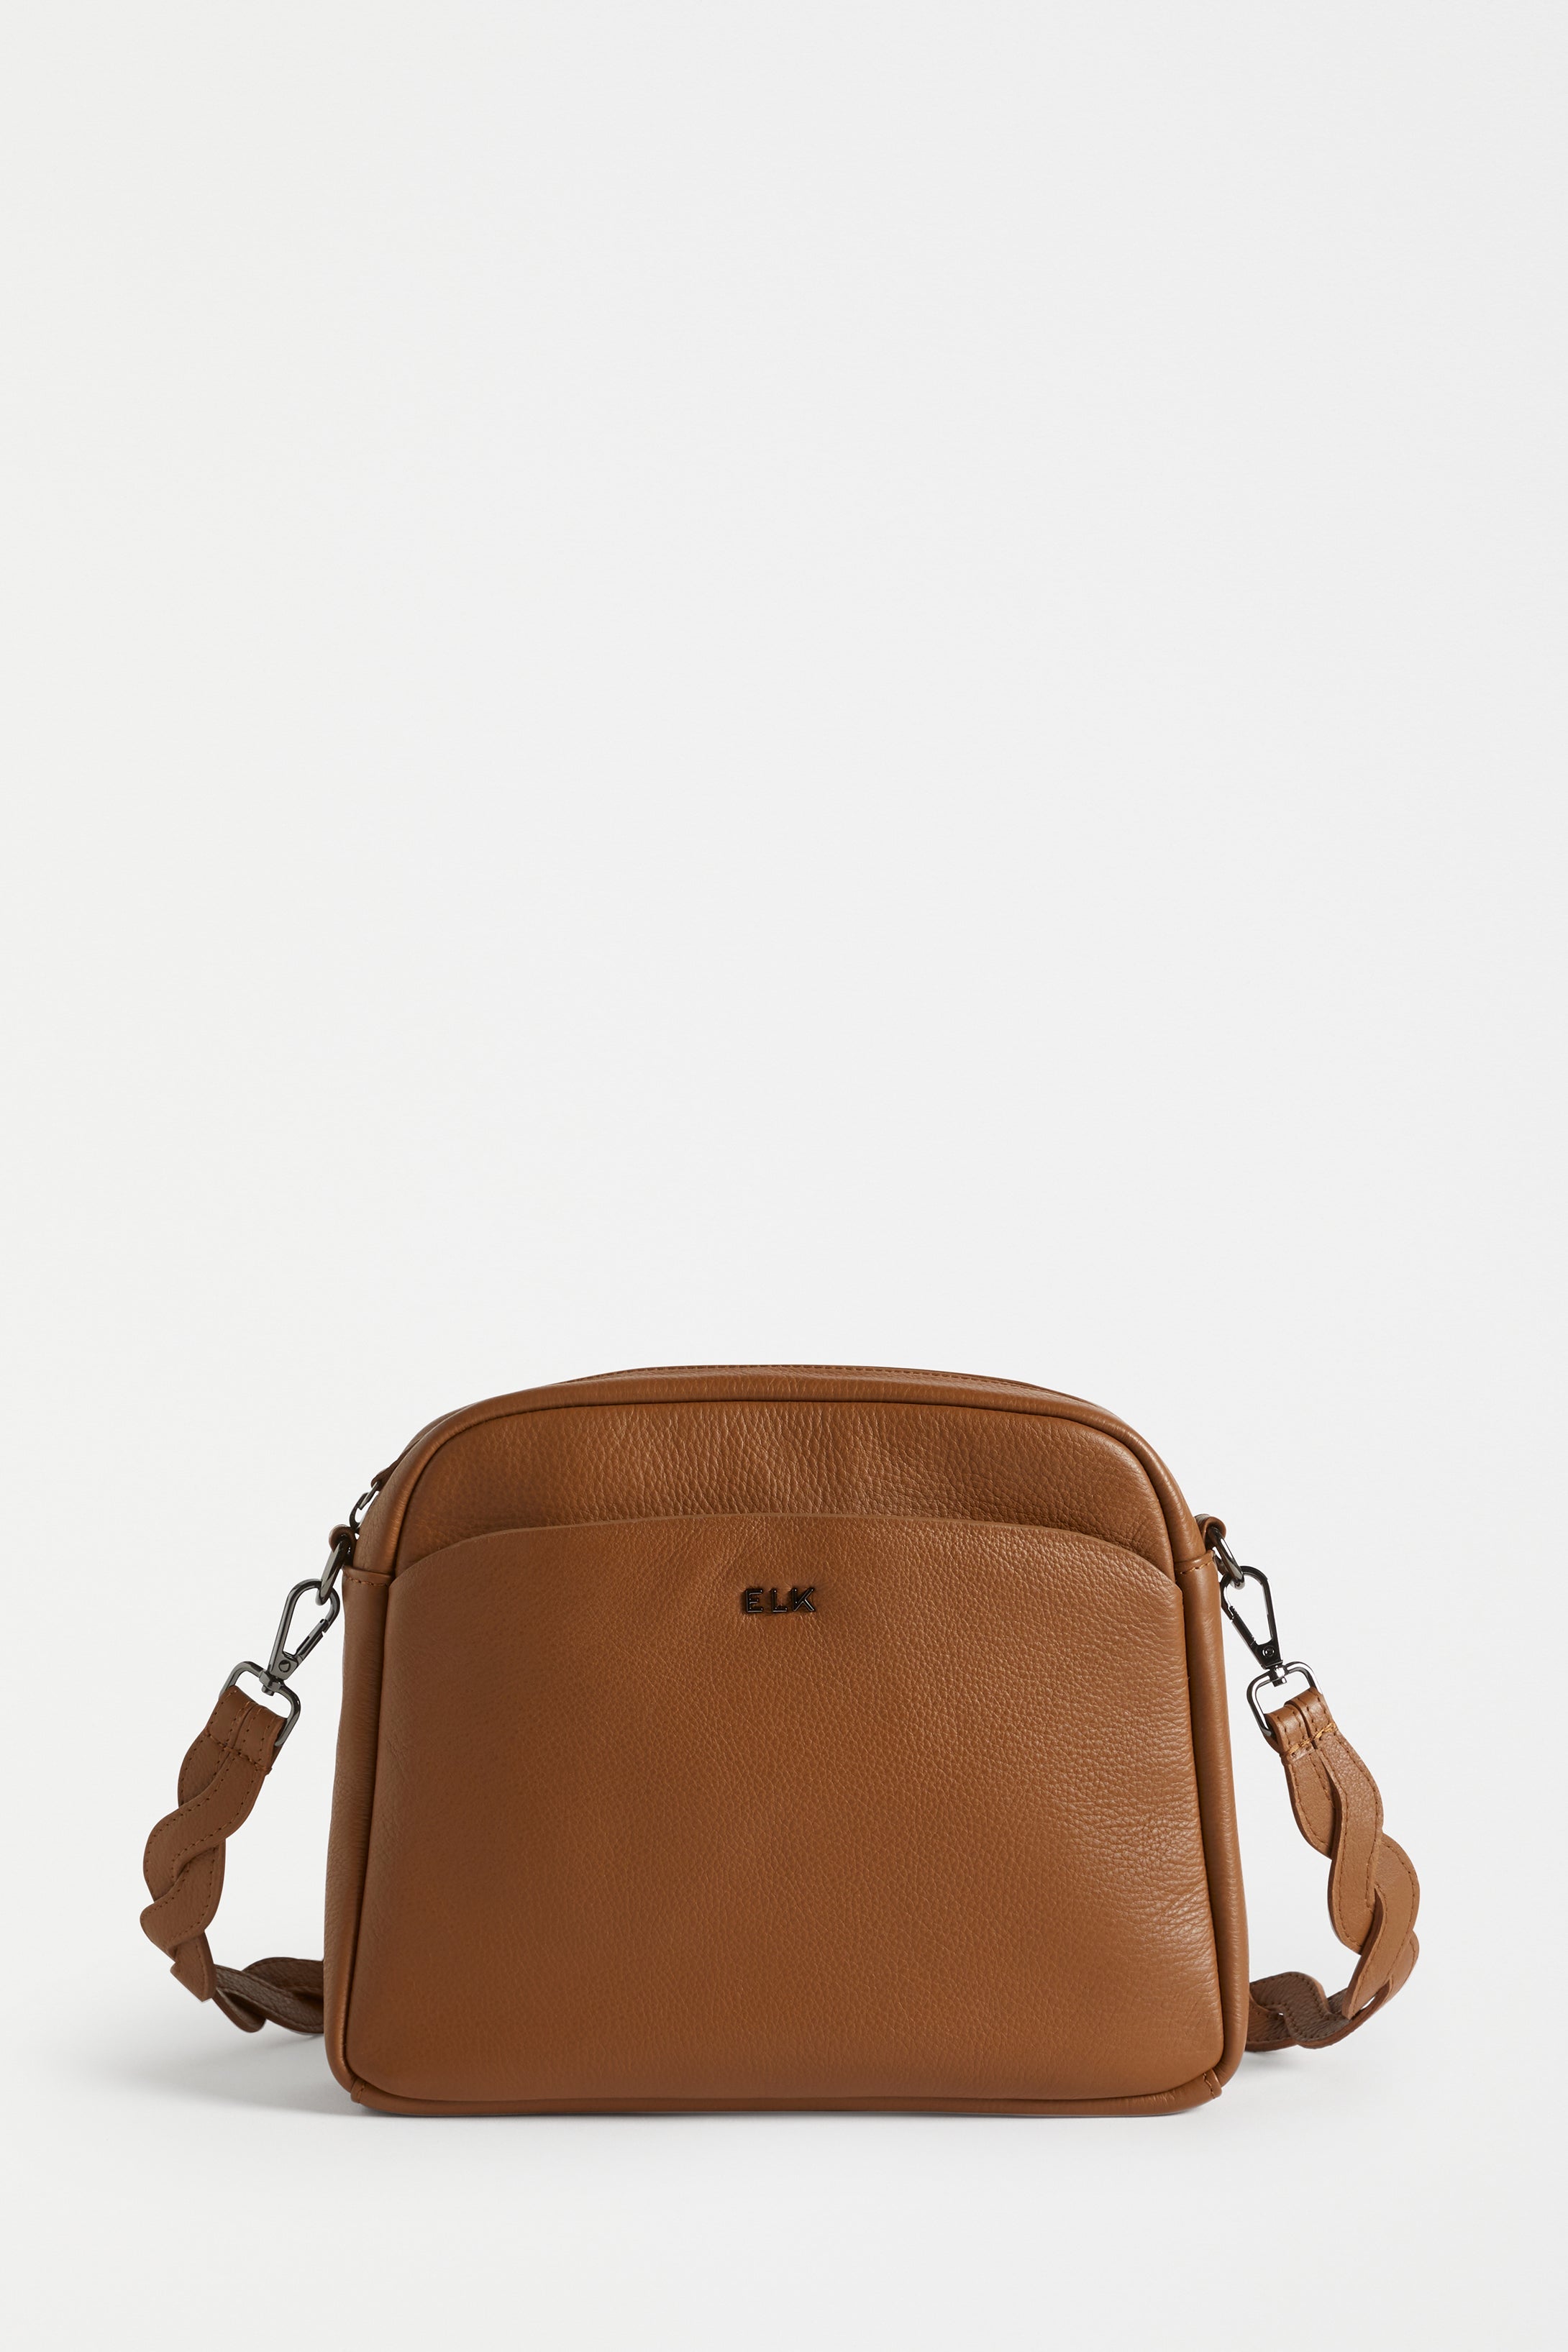 Elk Bag Green leather Convertible Backpack | eBay